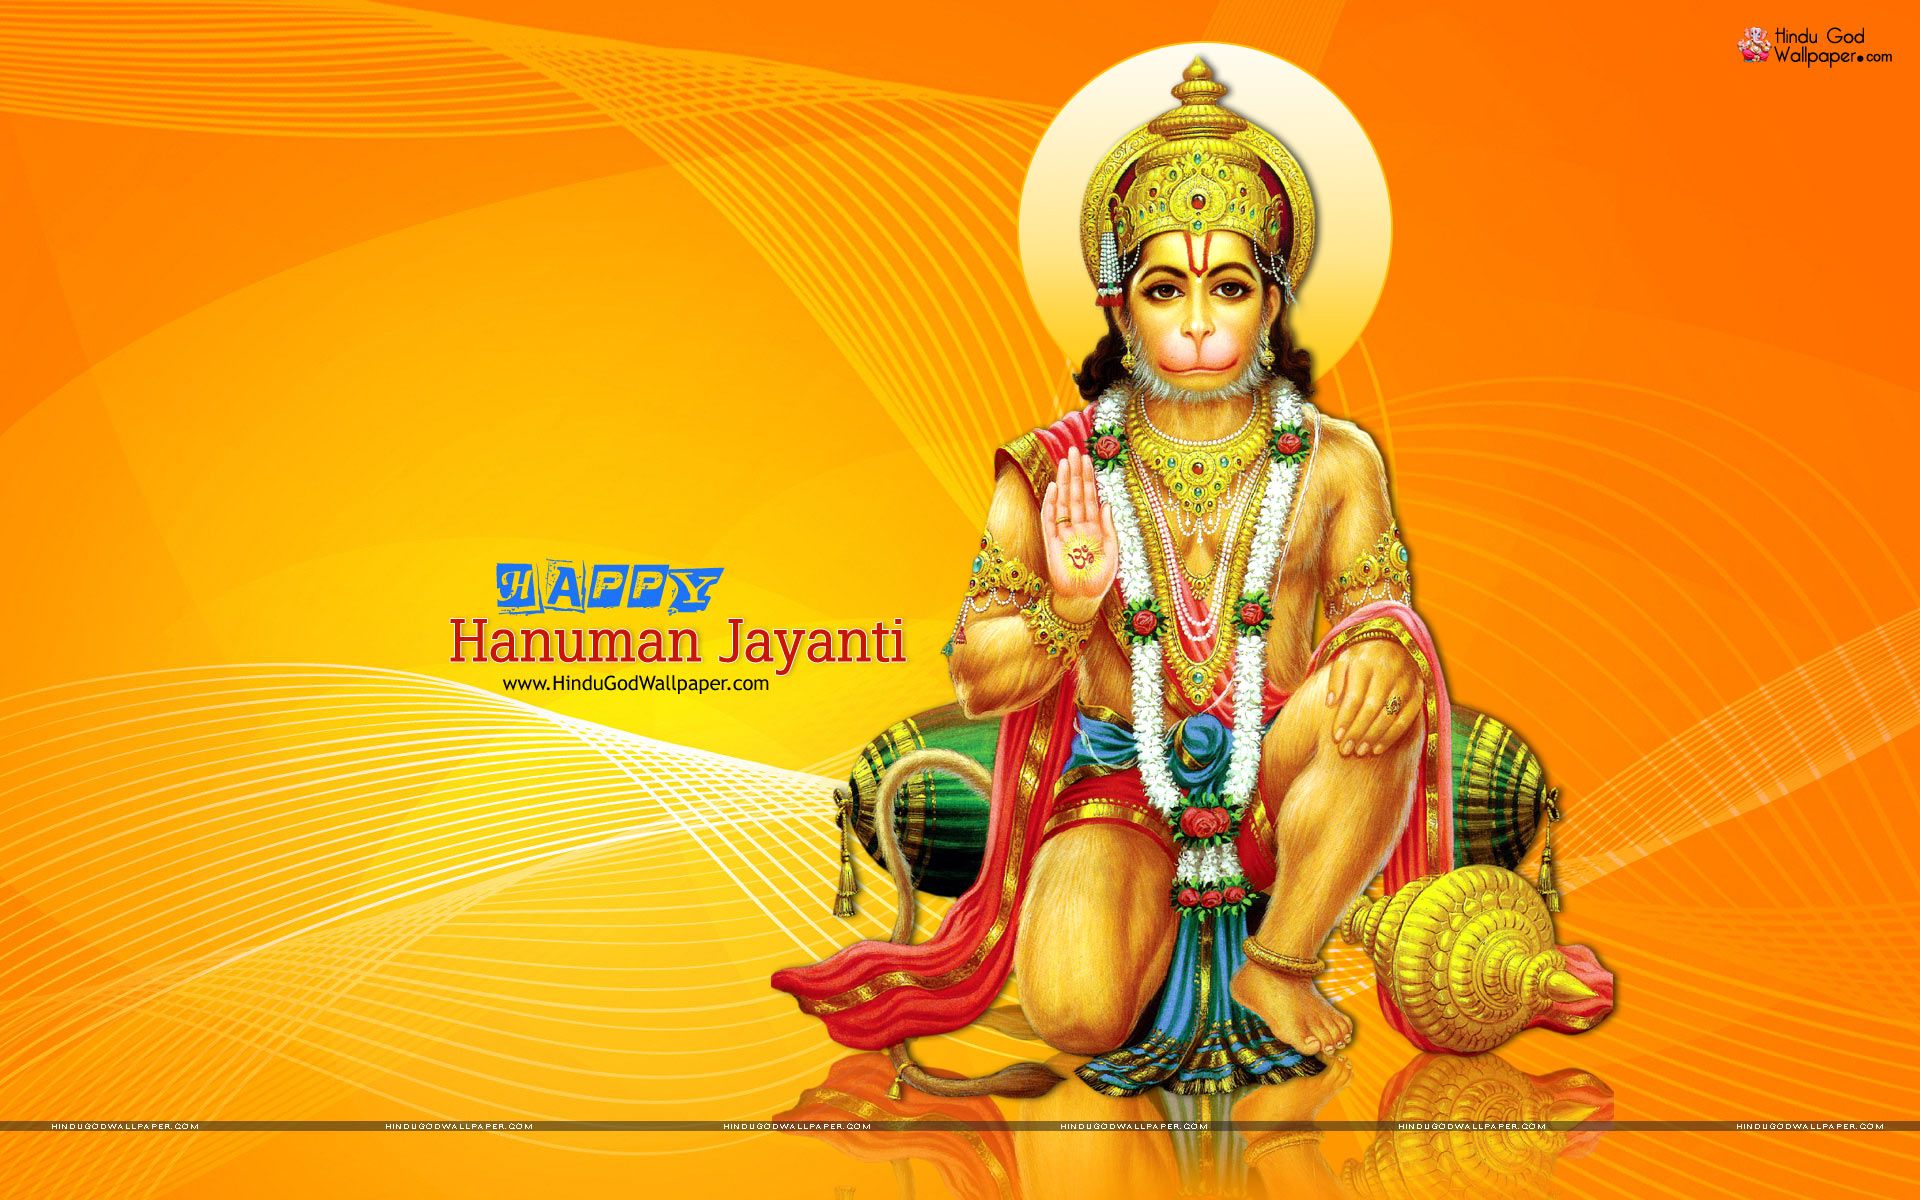 General 1920x1200 religion religious Hanuman digital art watermarked caption text